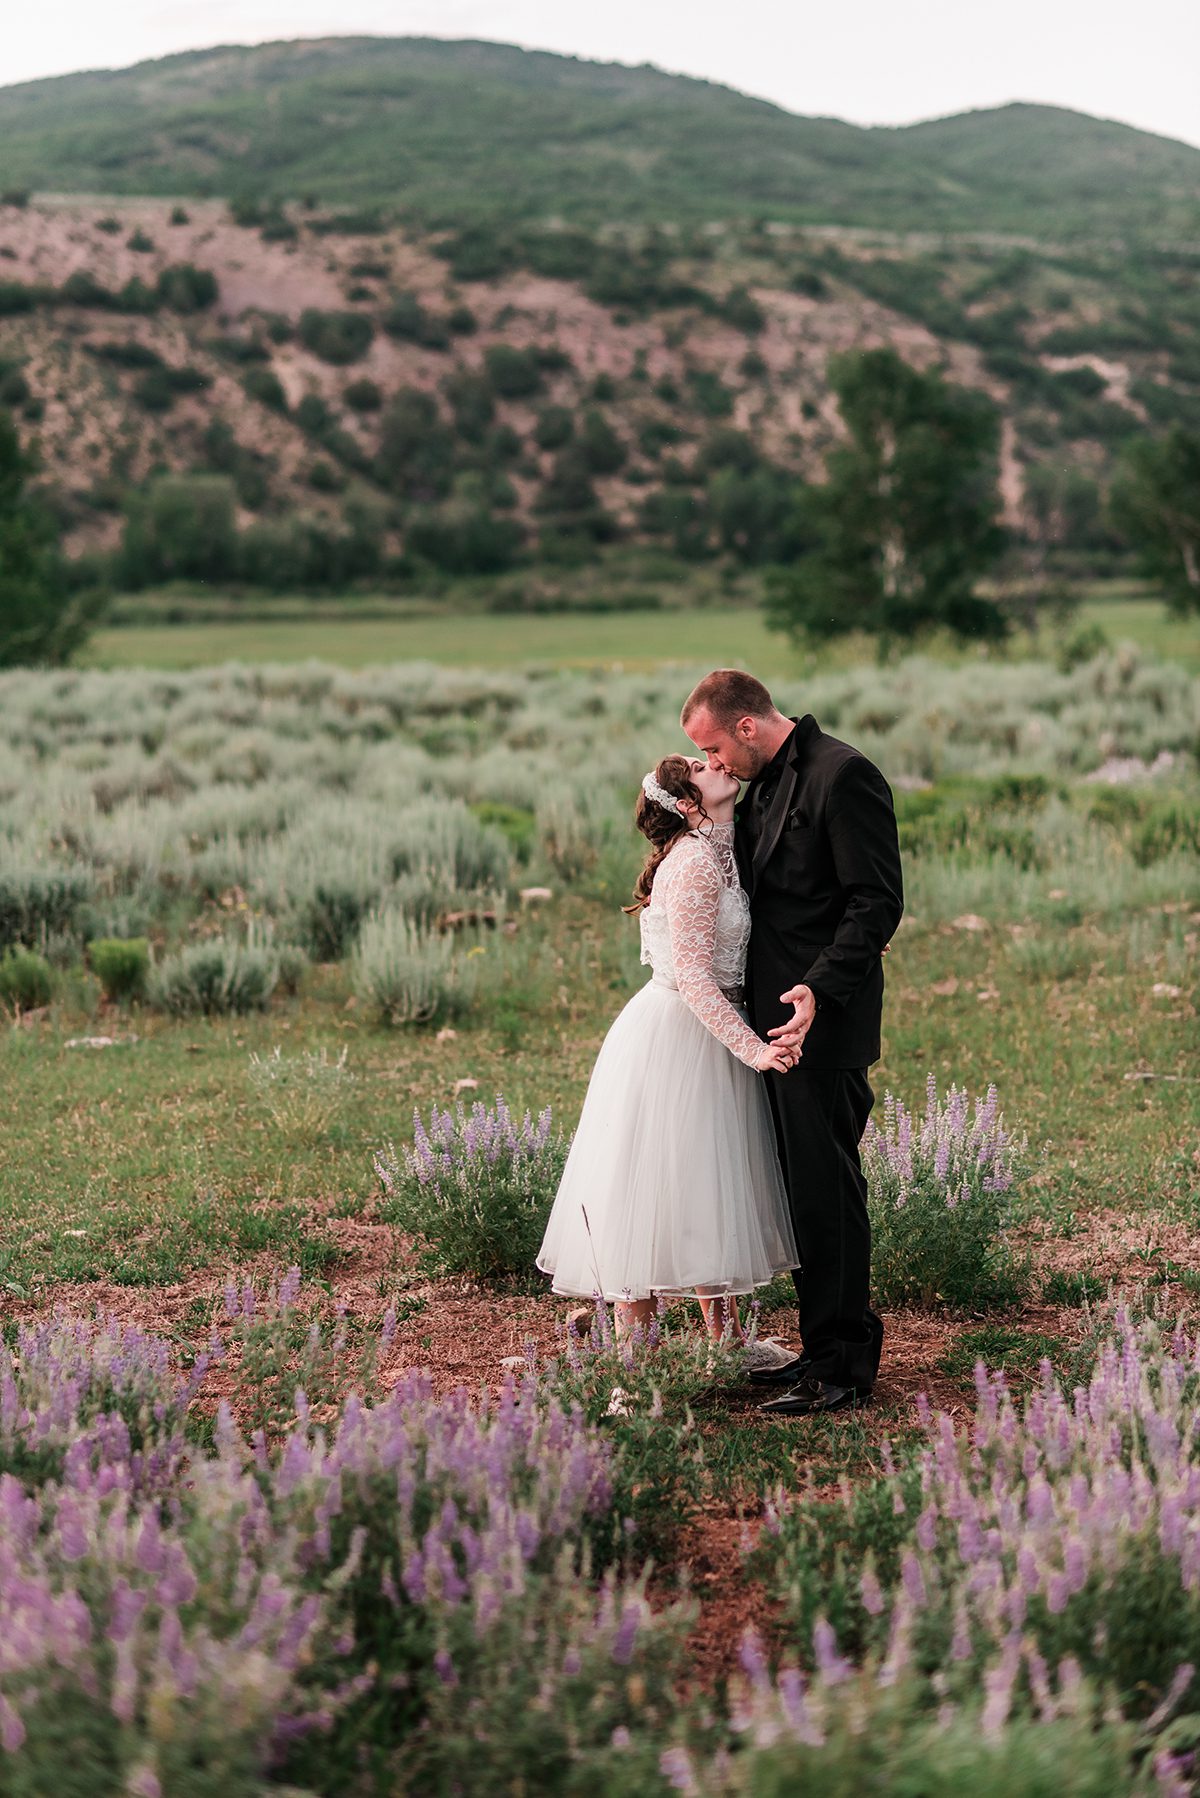 Josh & Annie in a field of purple lupine at Rolling R Ranch near Meeker